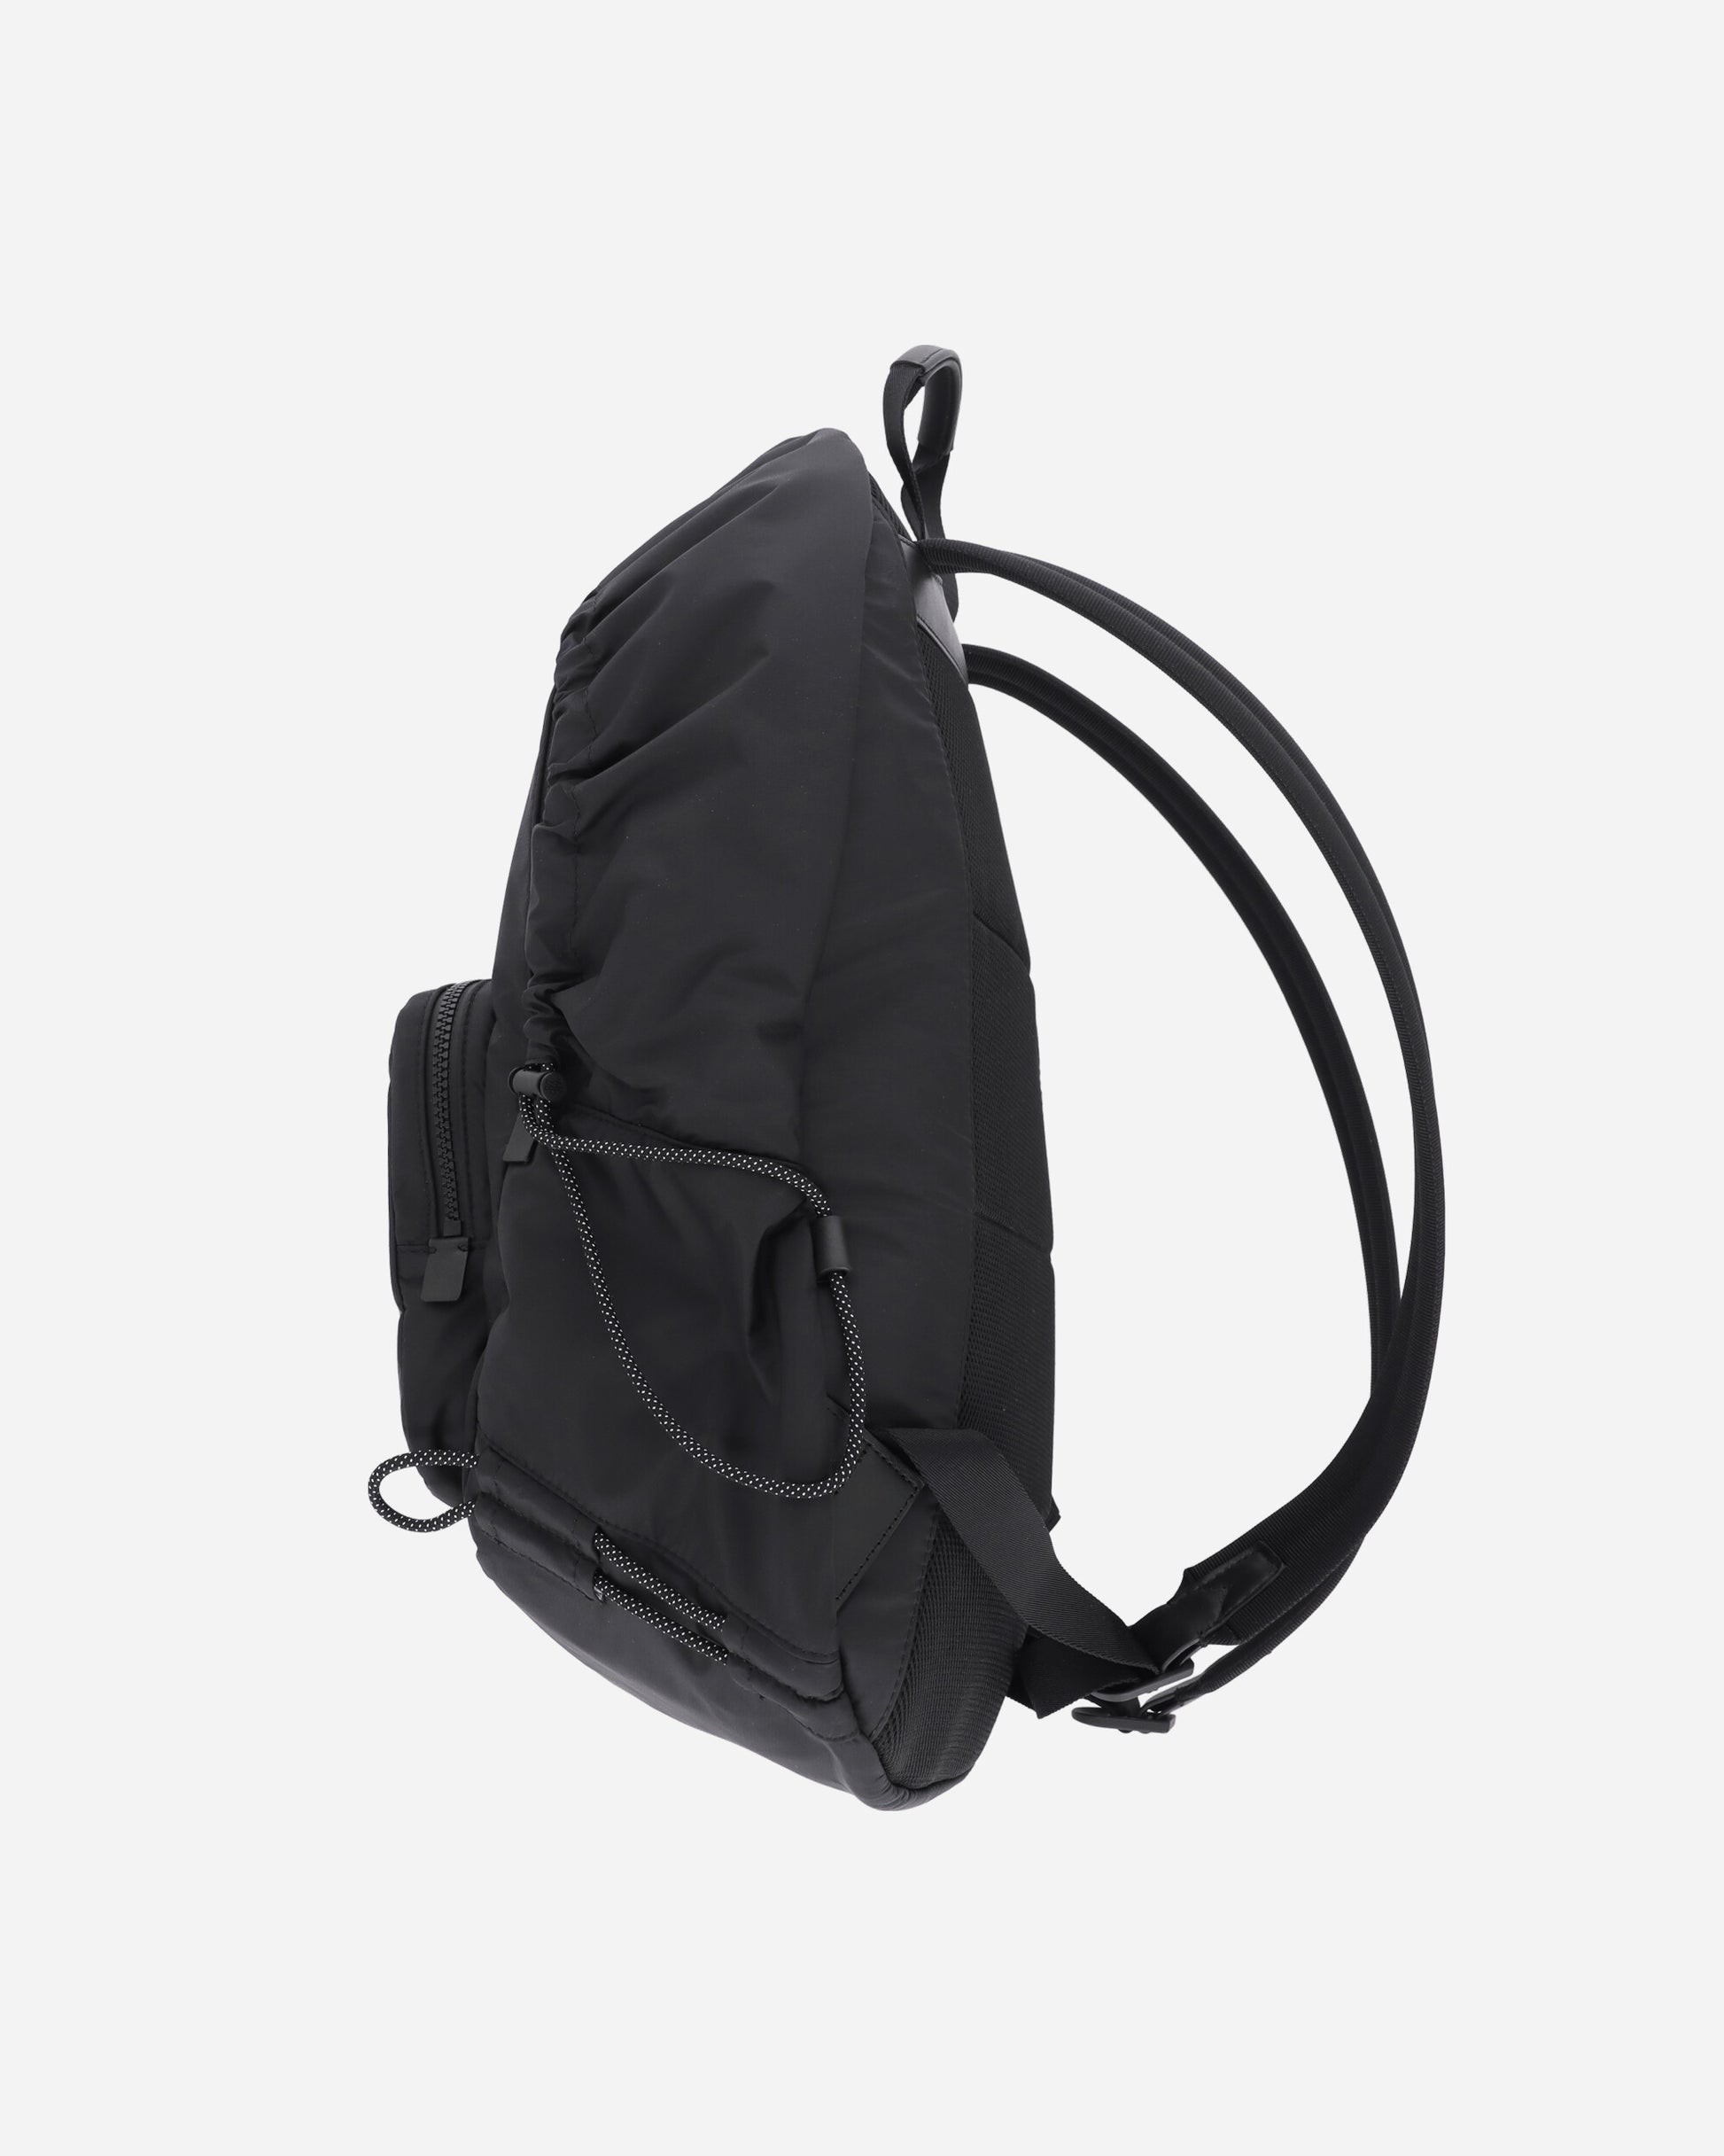 Moncler Makaio Backpack Black Bags and Backpacks Backpacks 5A00008M3815 999